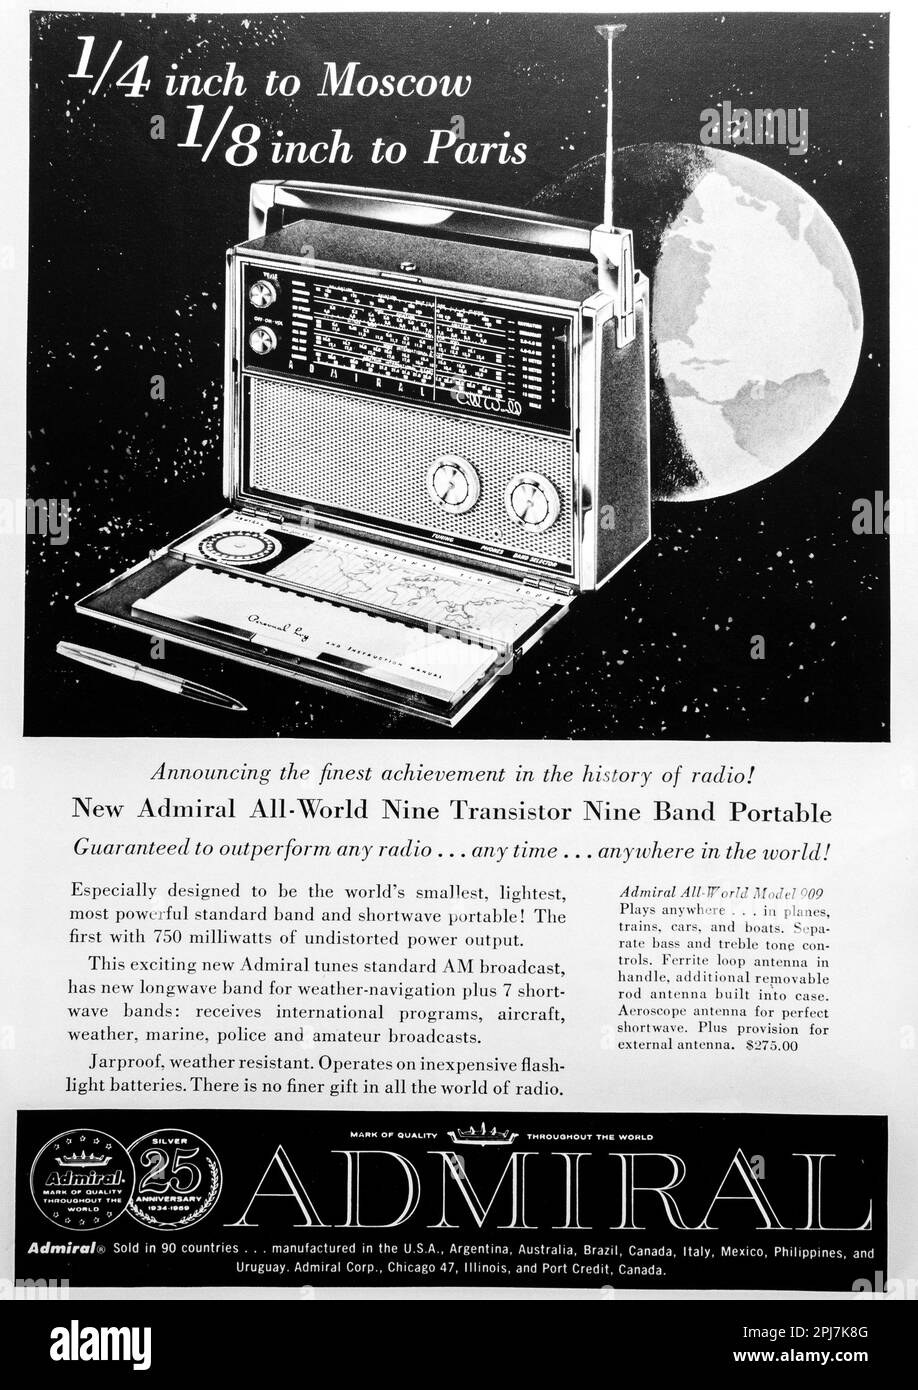 Admiral world transistor portable radio advert in a Natgeo magazine, November 1959 Stock Photo